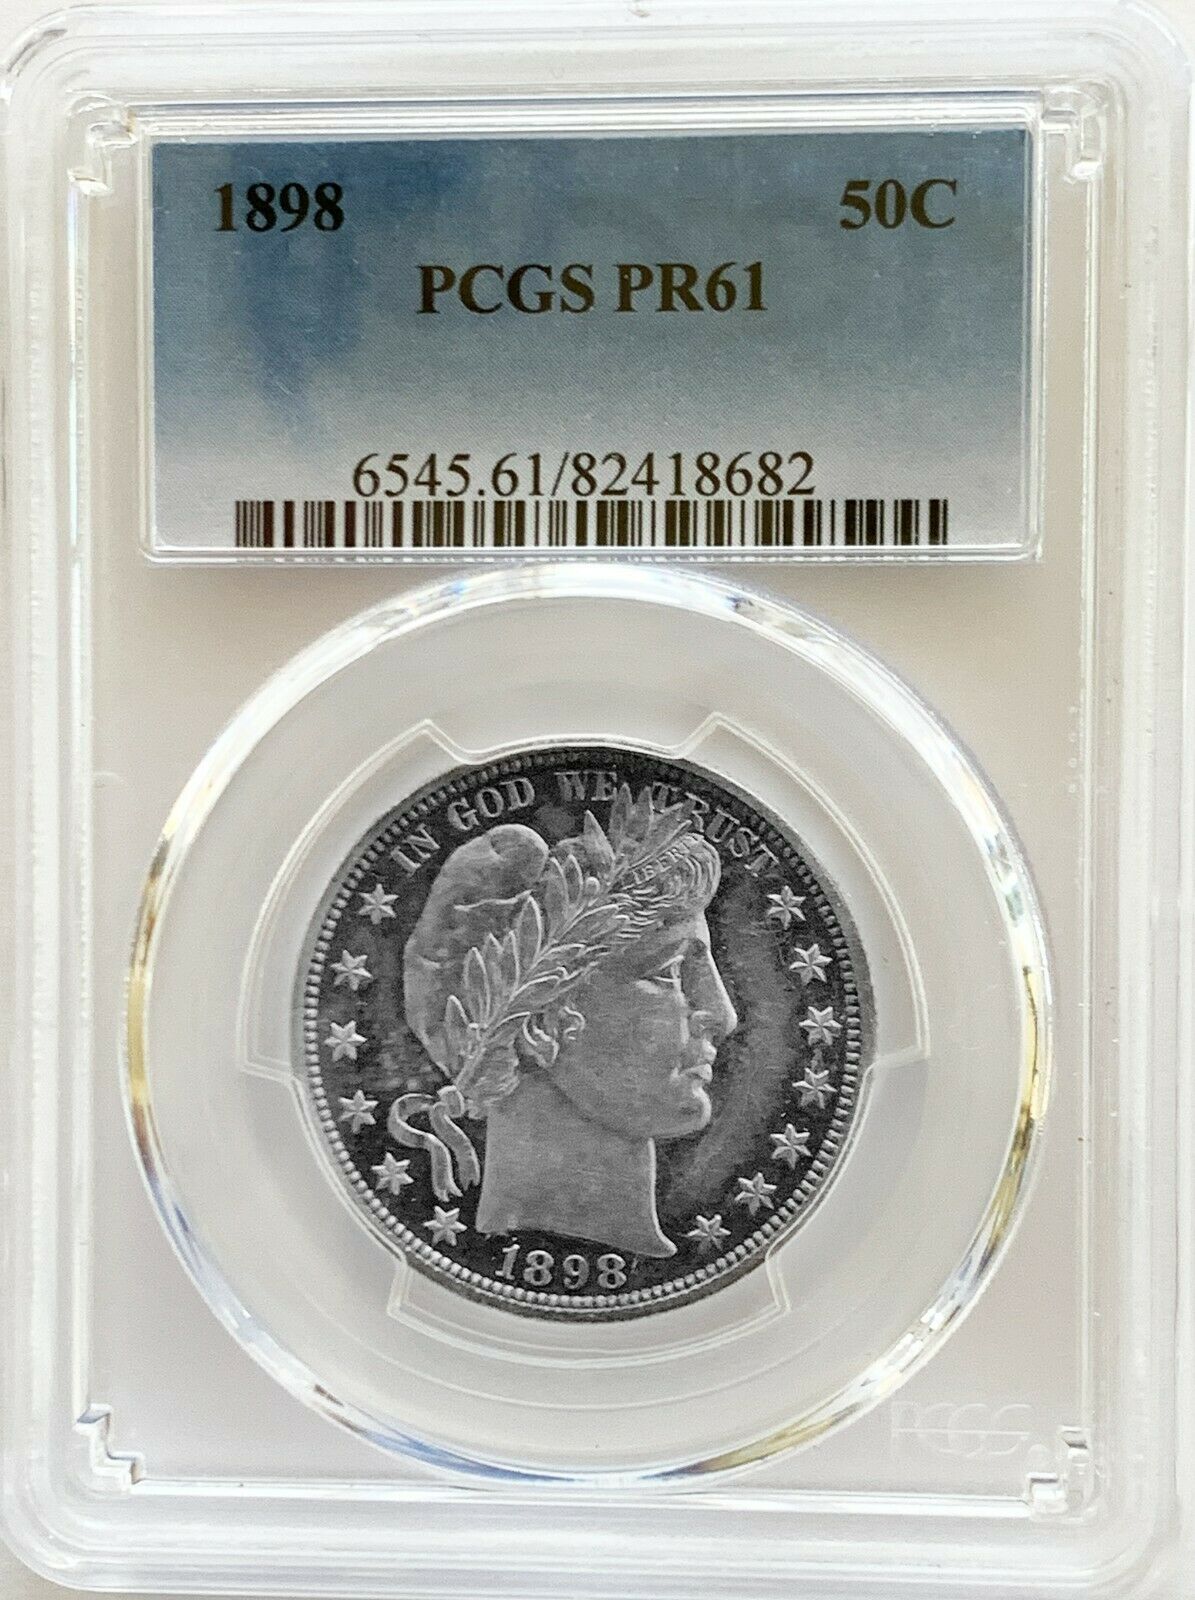 1898 50c Barber Proof Coin - Pcgs Pr61